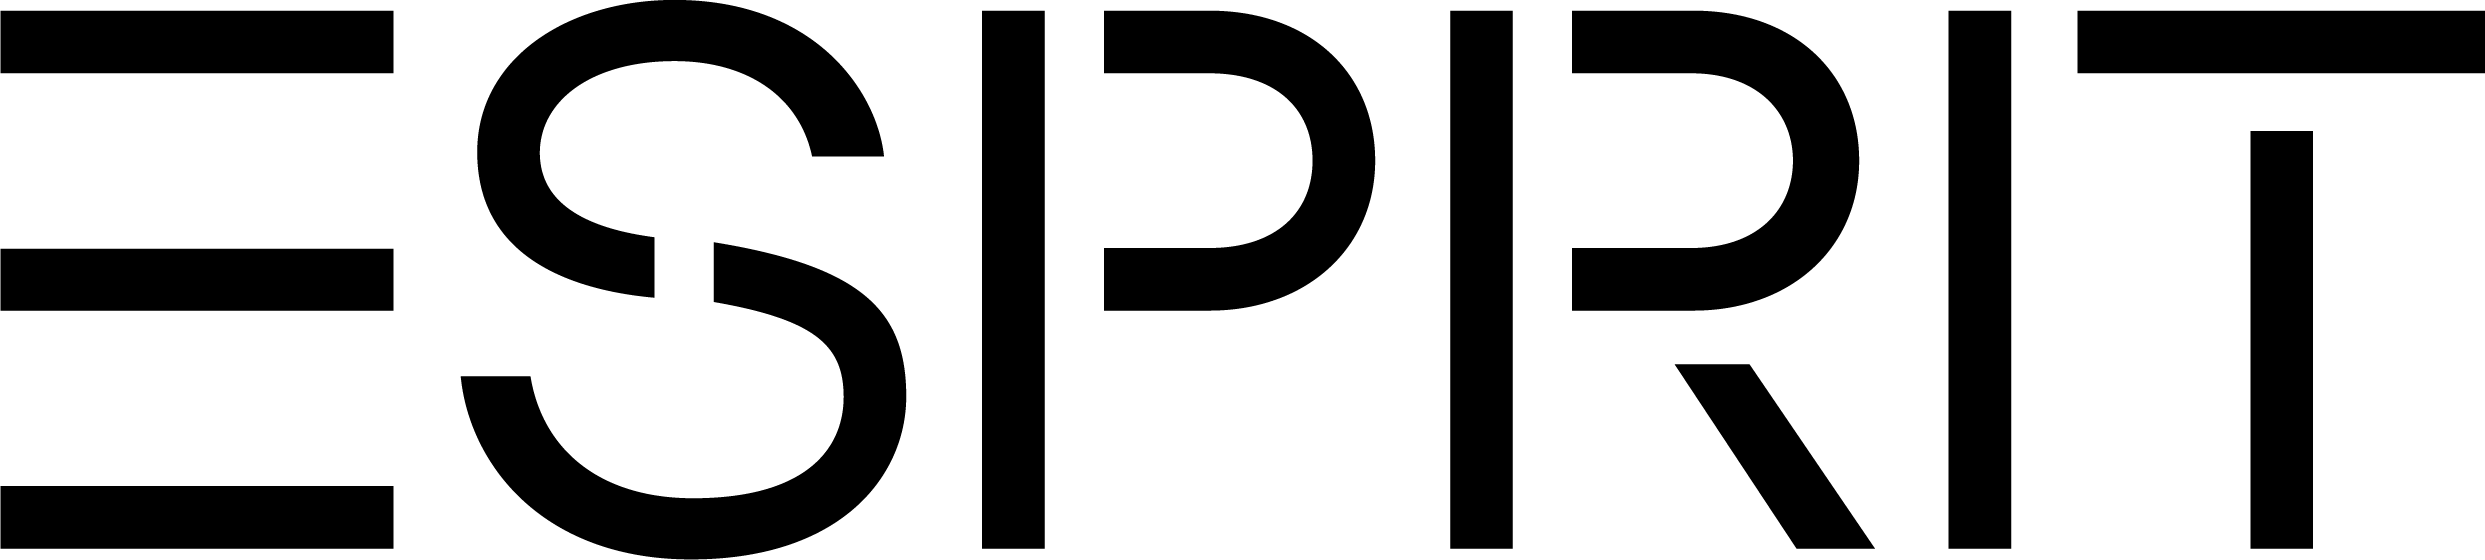 Logo marque Esprit